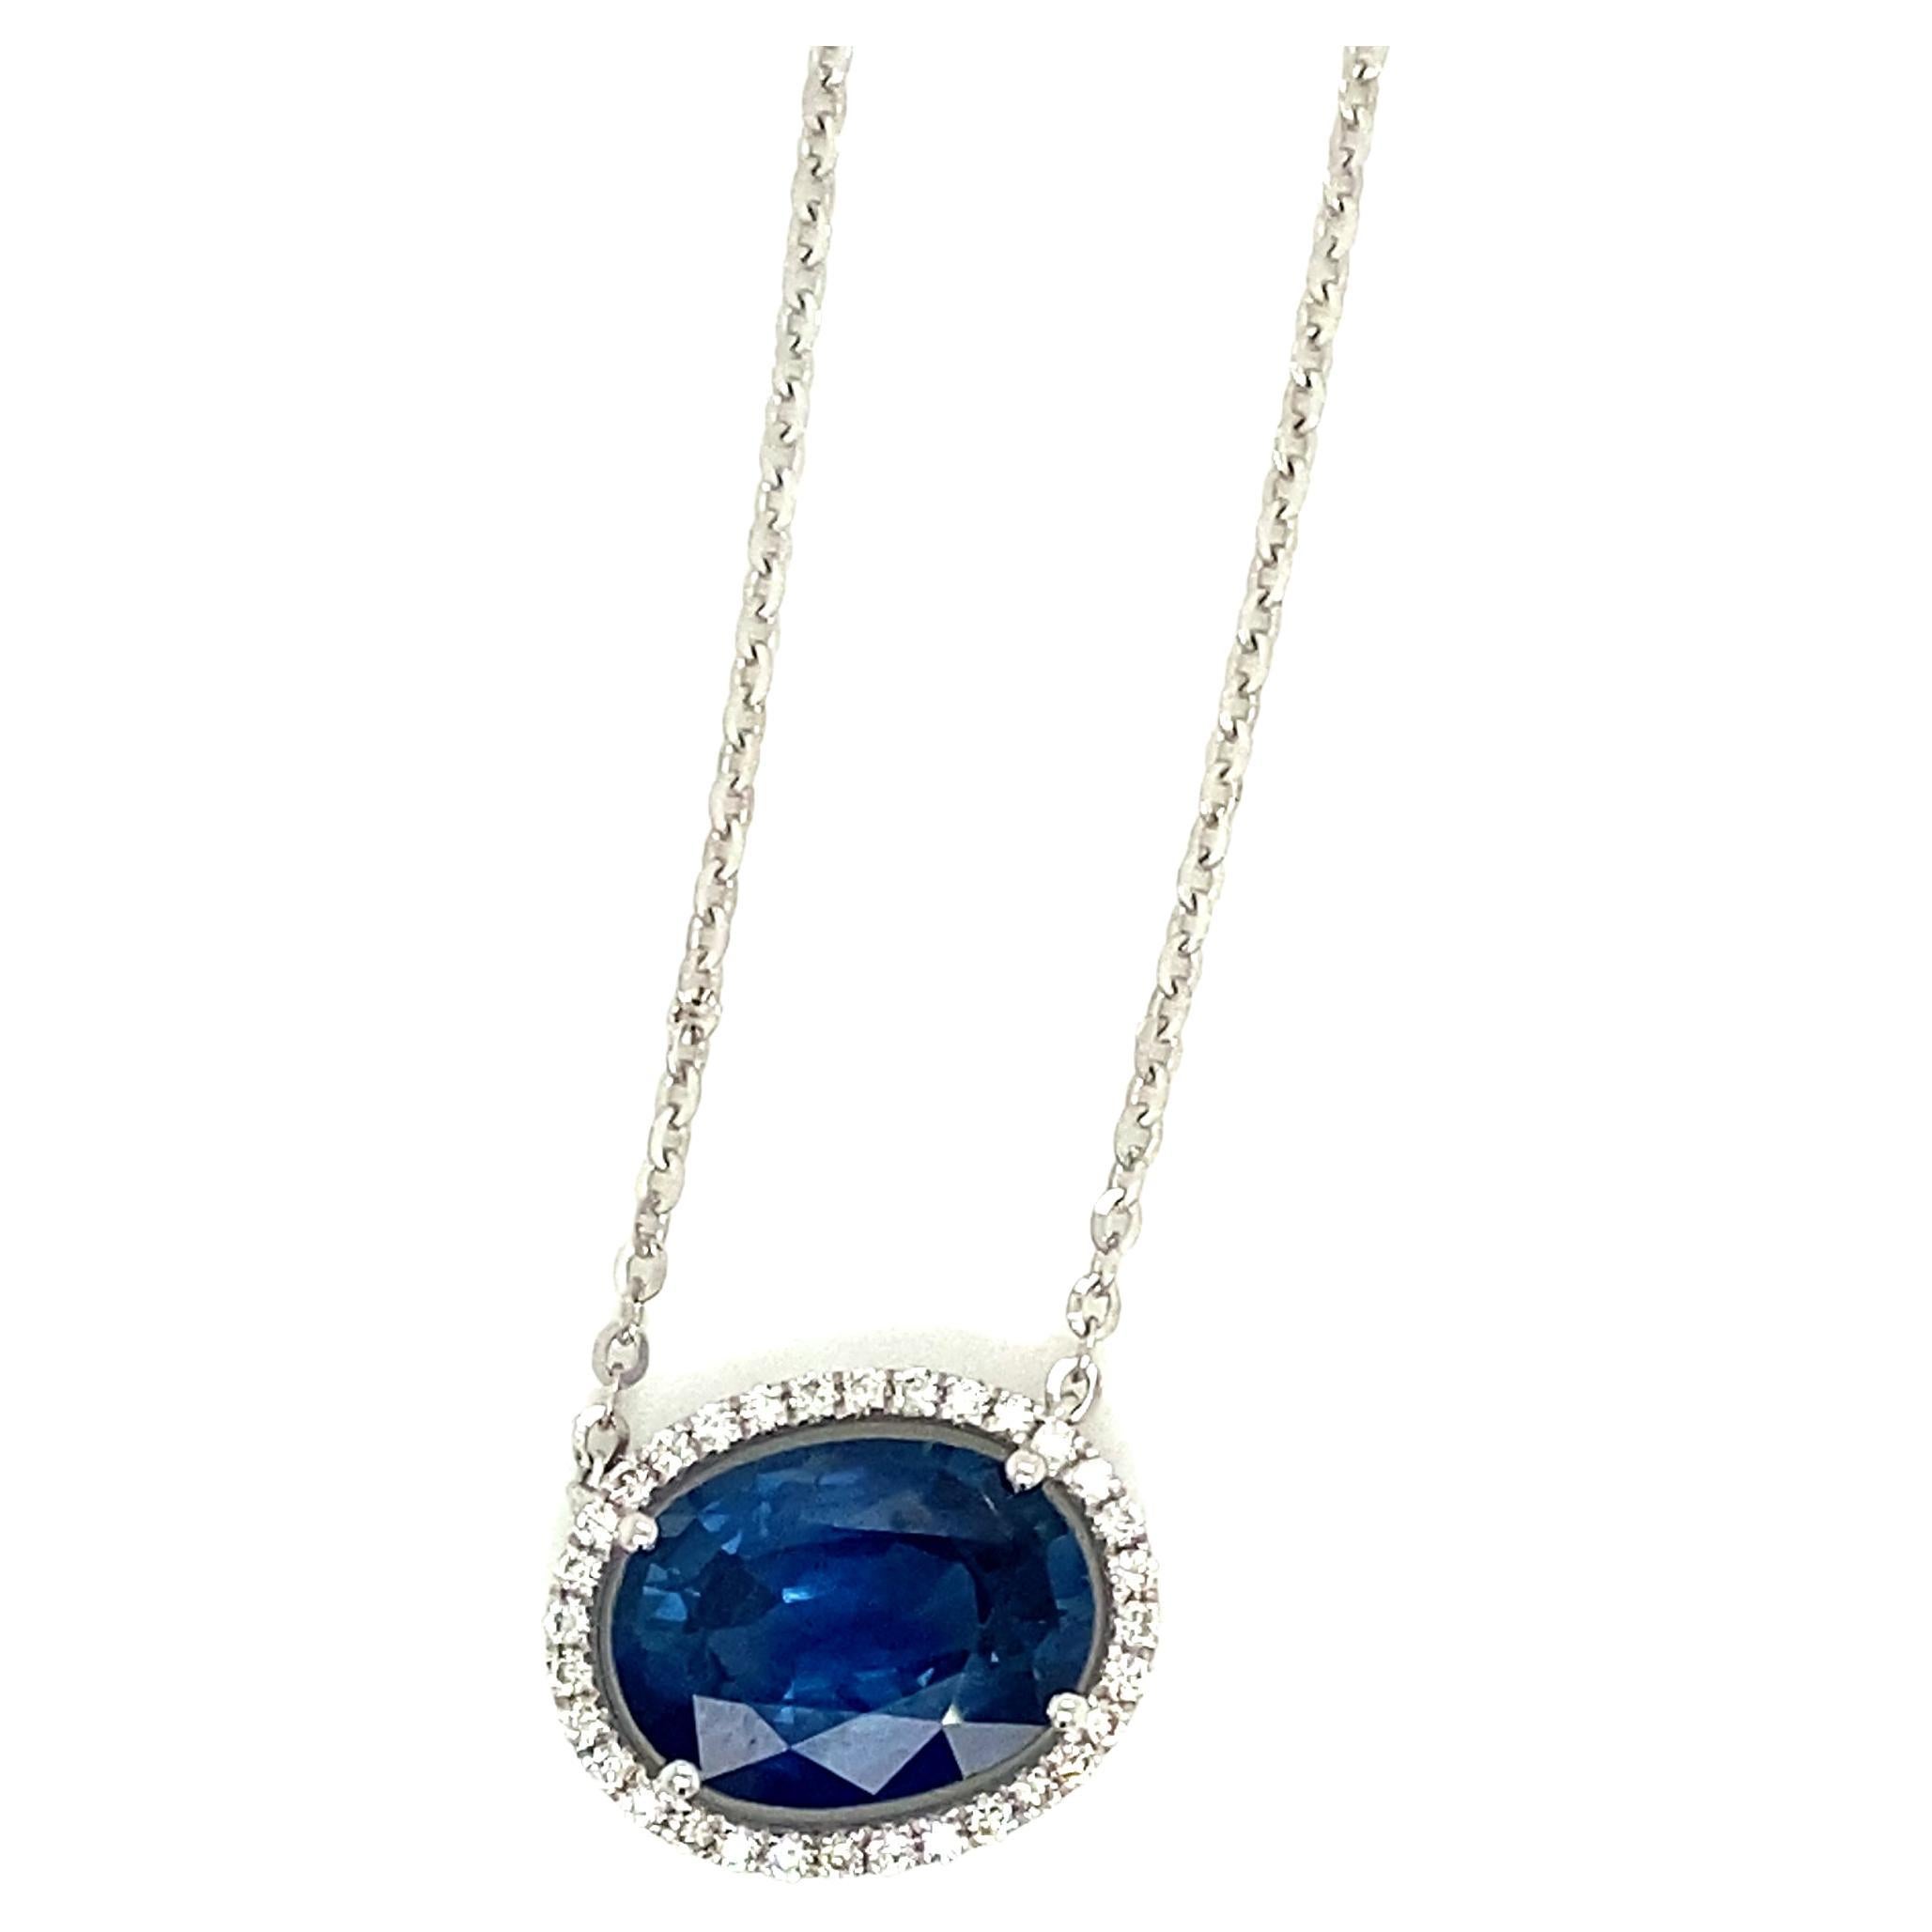 4.96 Carat Oval-Cut Vivid Blue Sapphire and White Diamond Pendant Necklace